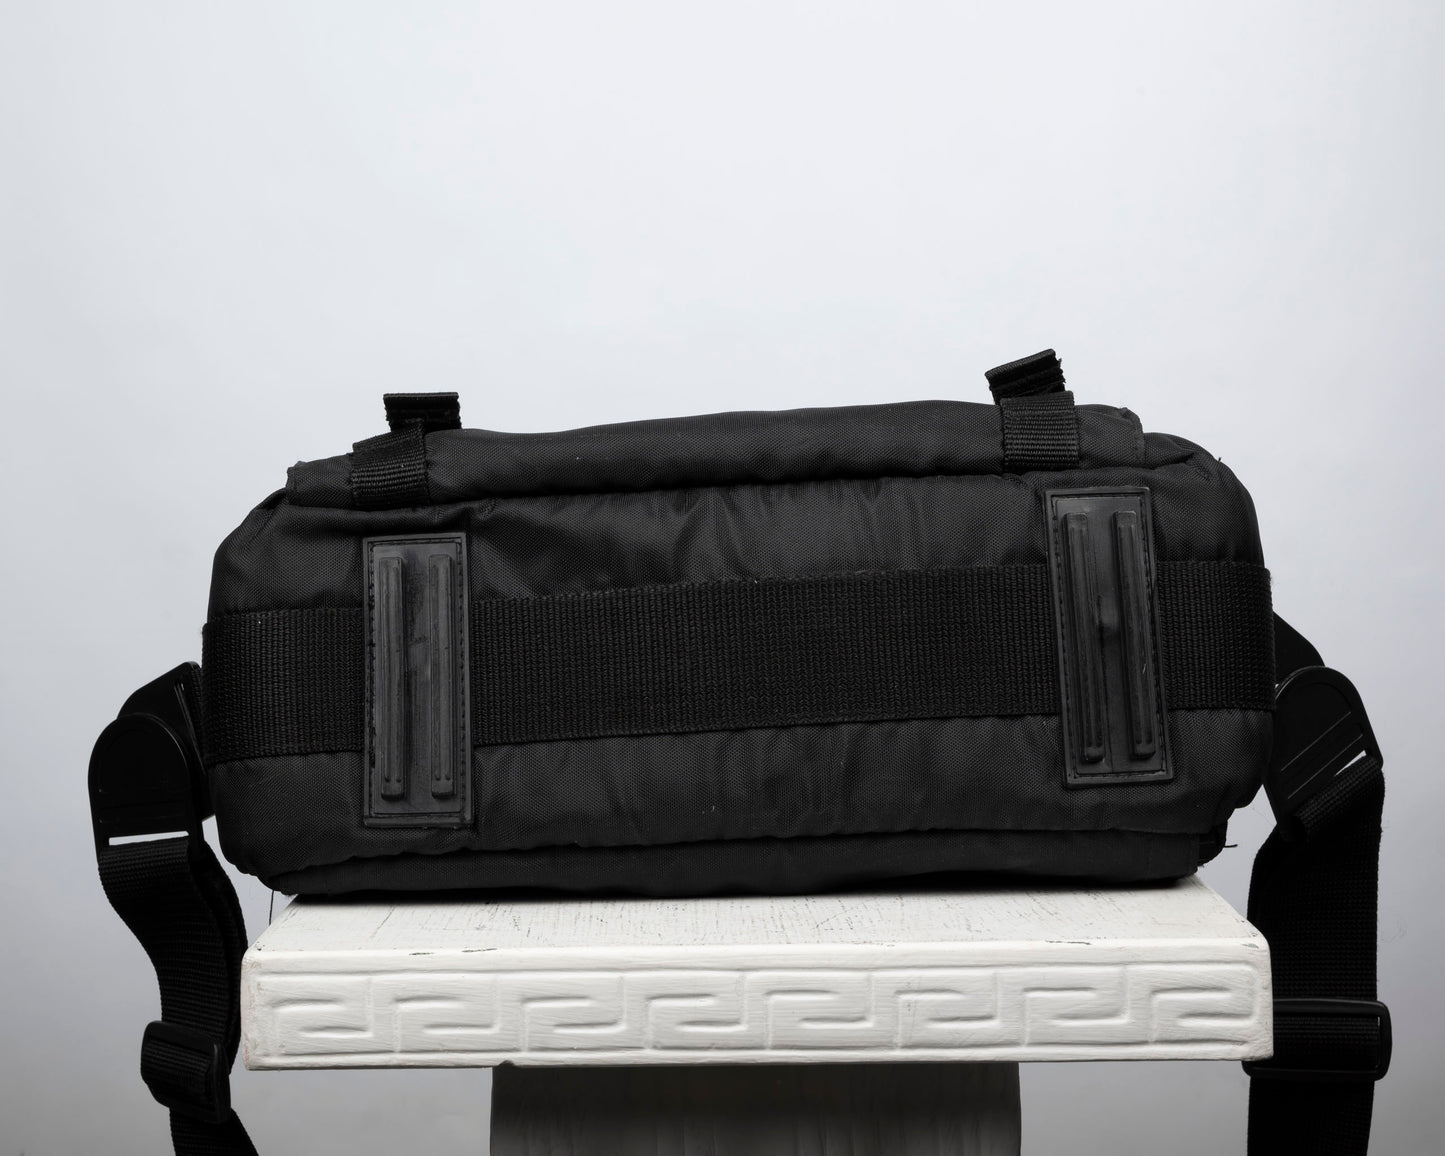 Optex medium-to-large sized black camera bag